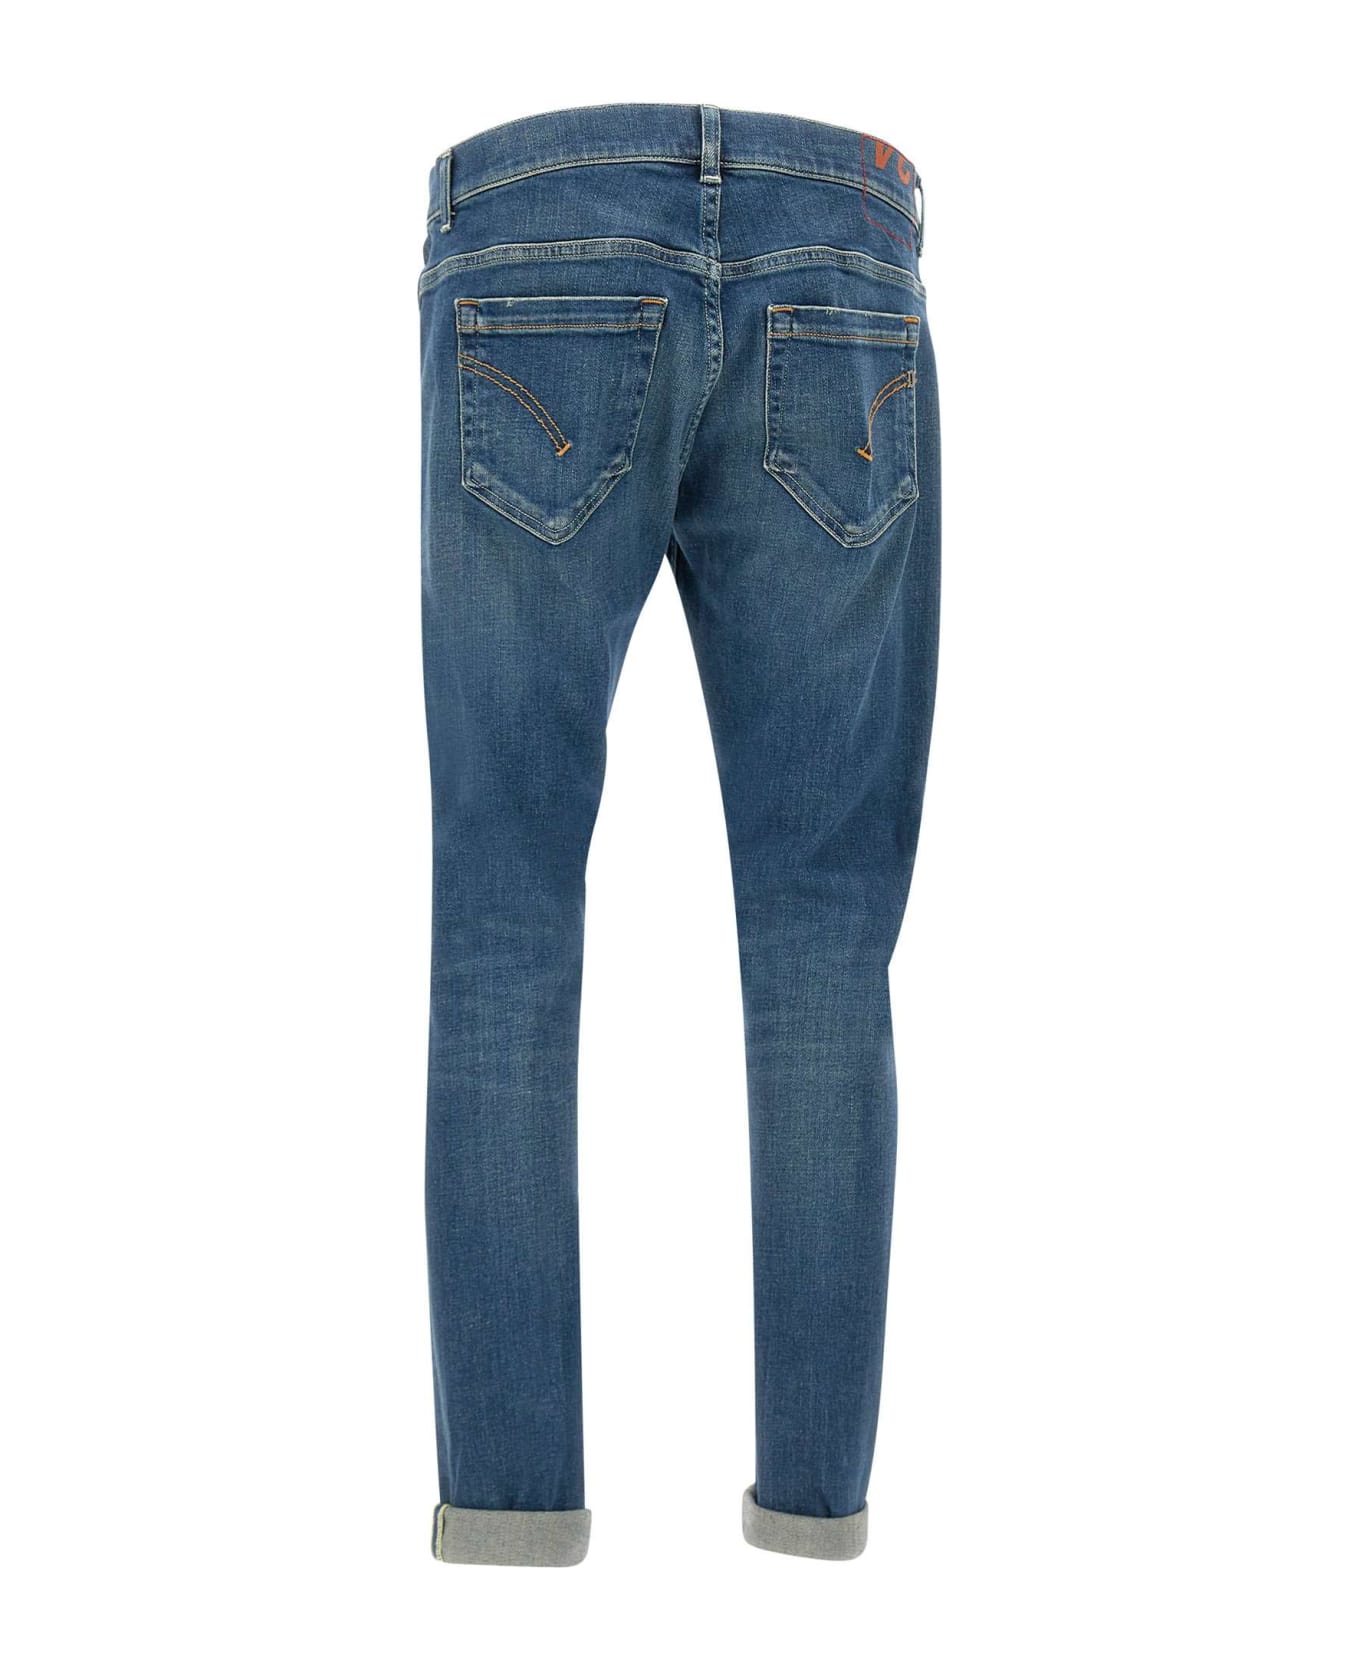 Dondup "george" Jeans - BLUE